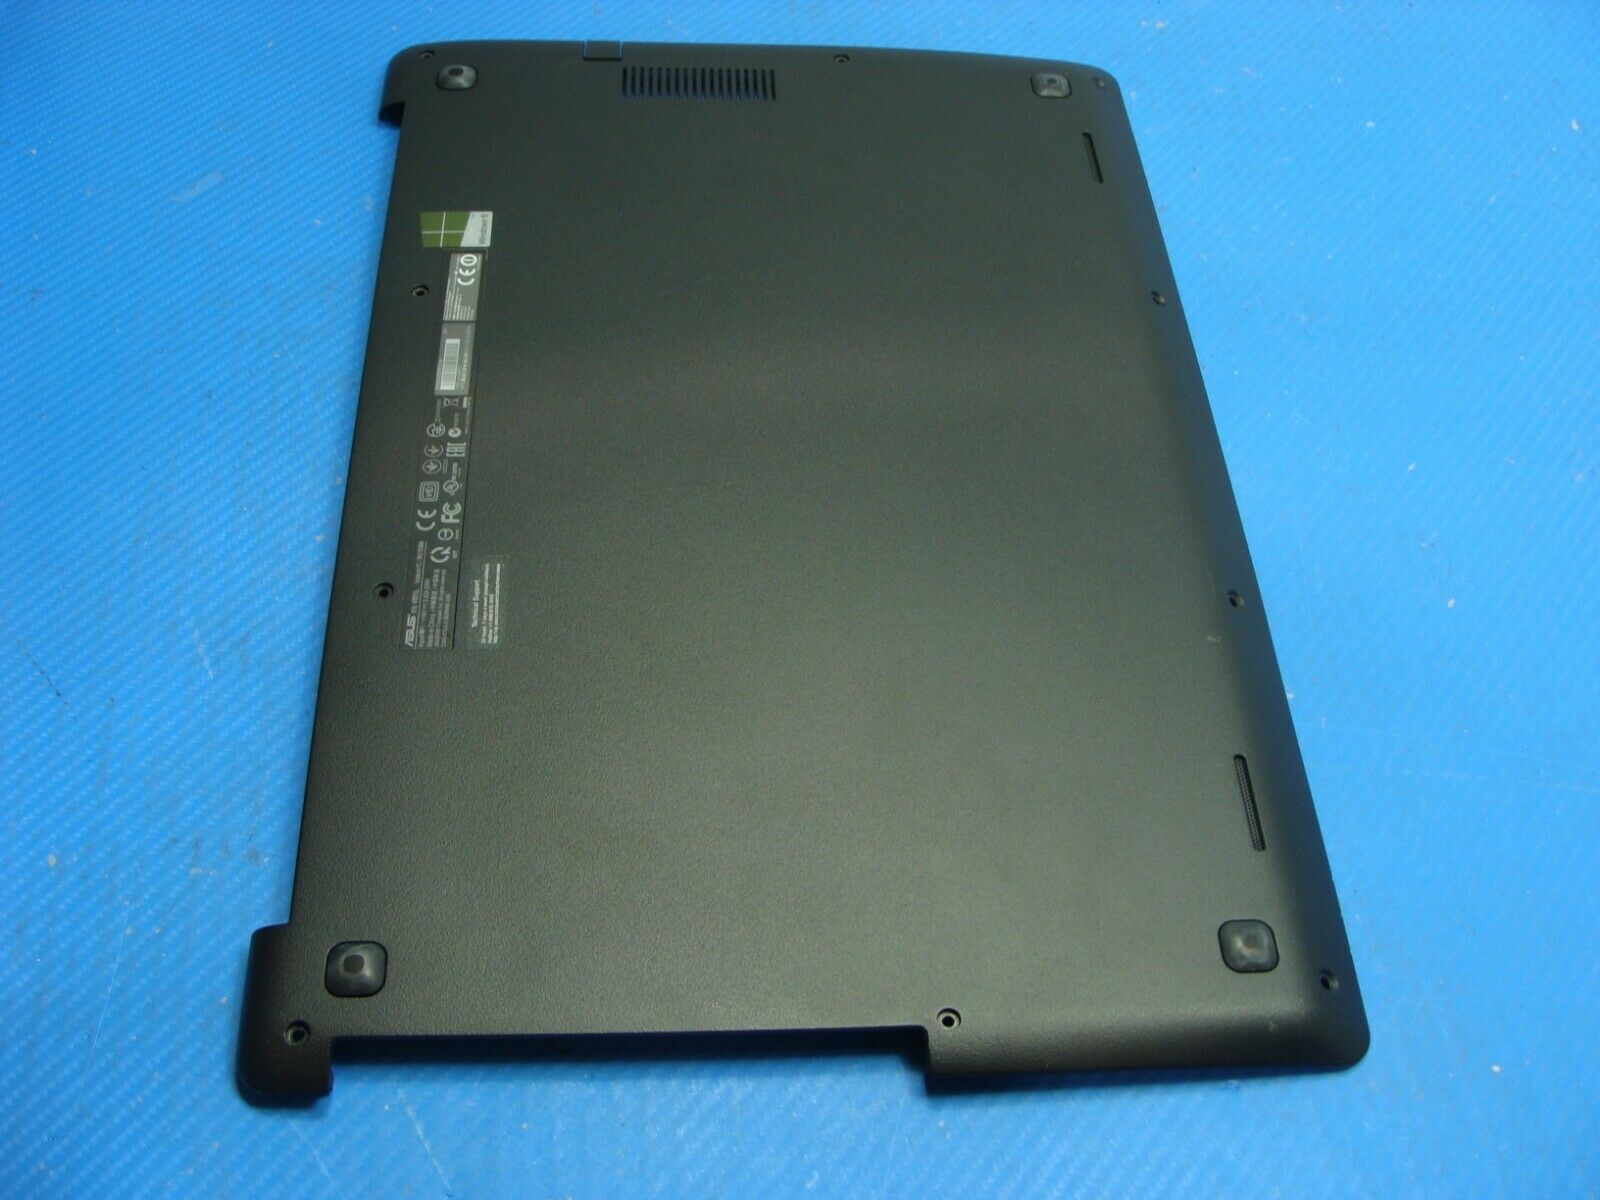 Asus VivoBook V551LA-DH51T 15.6